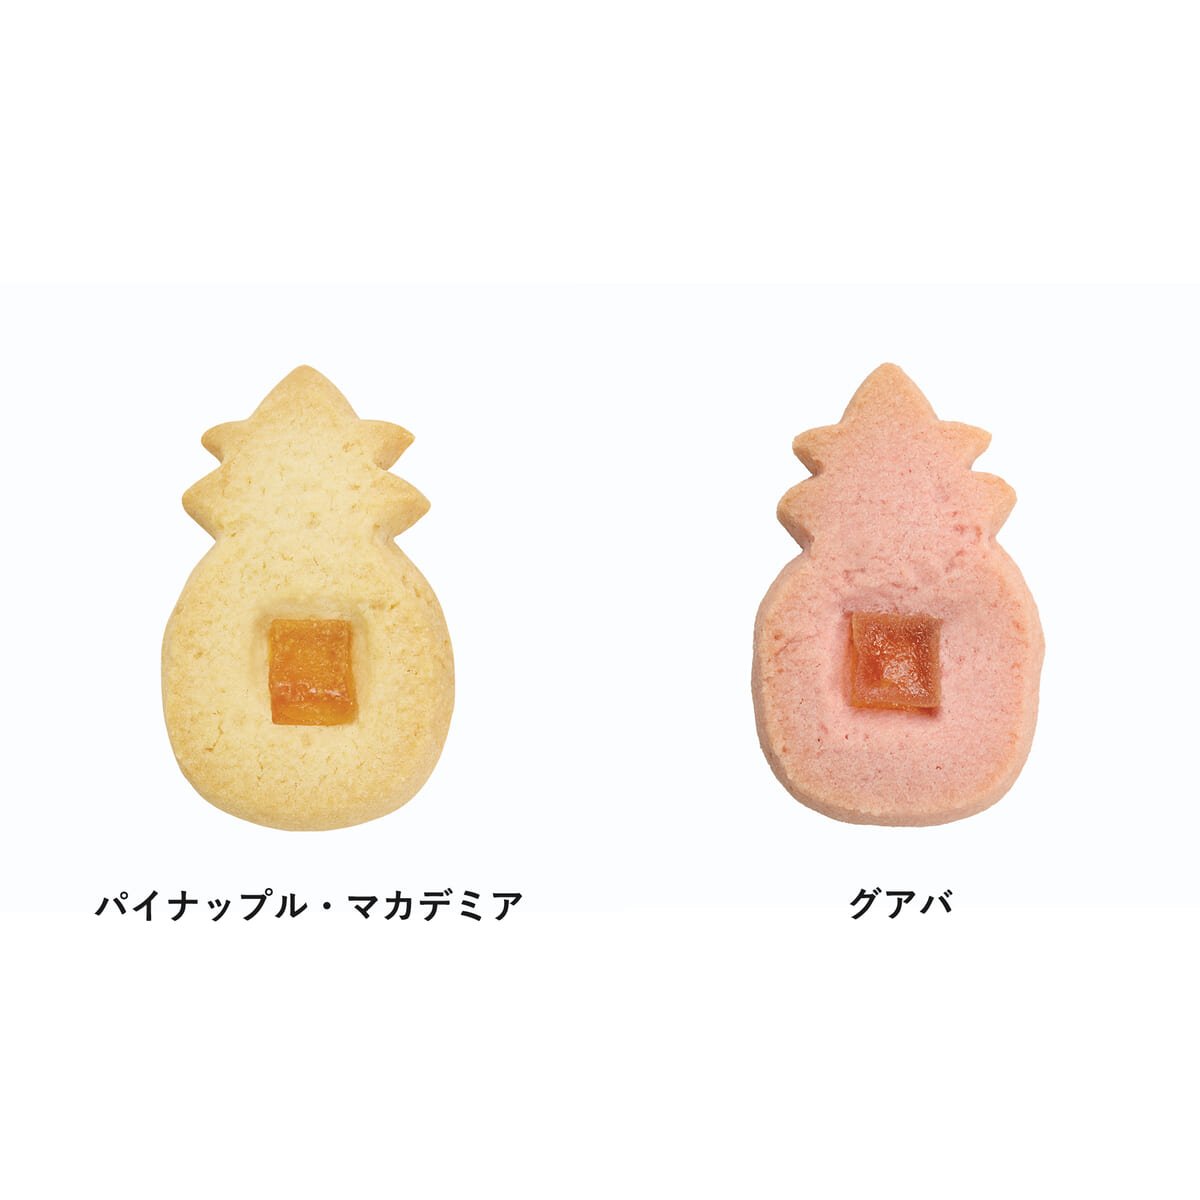 【Honolulu Cookie Company】スティッチ＆スクランプ クッキー パイナップル型ボックス入り05